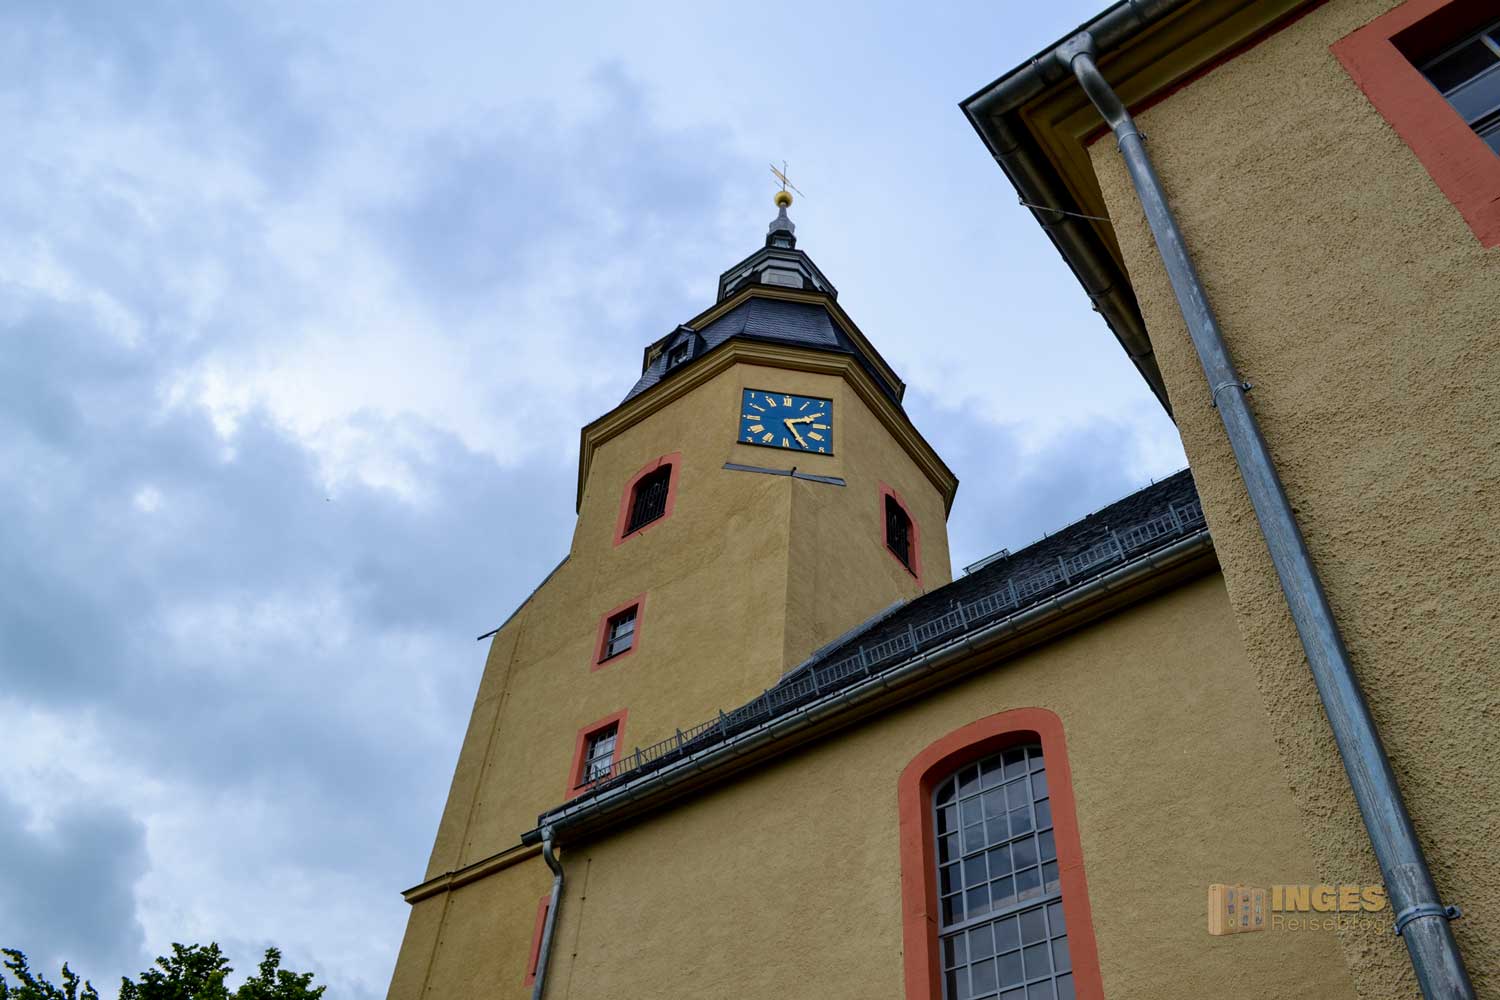 Barockkirche in Großhartmannsdorf